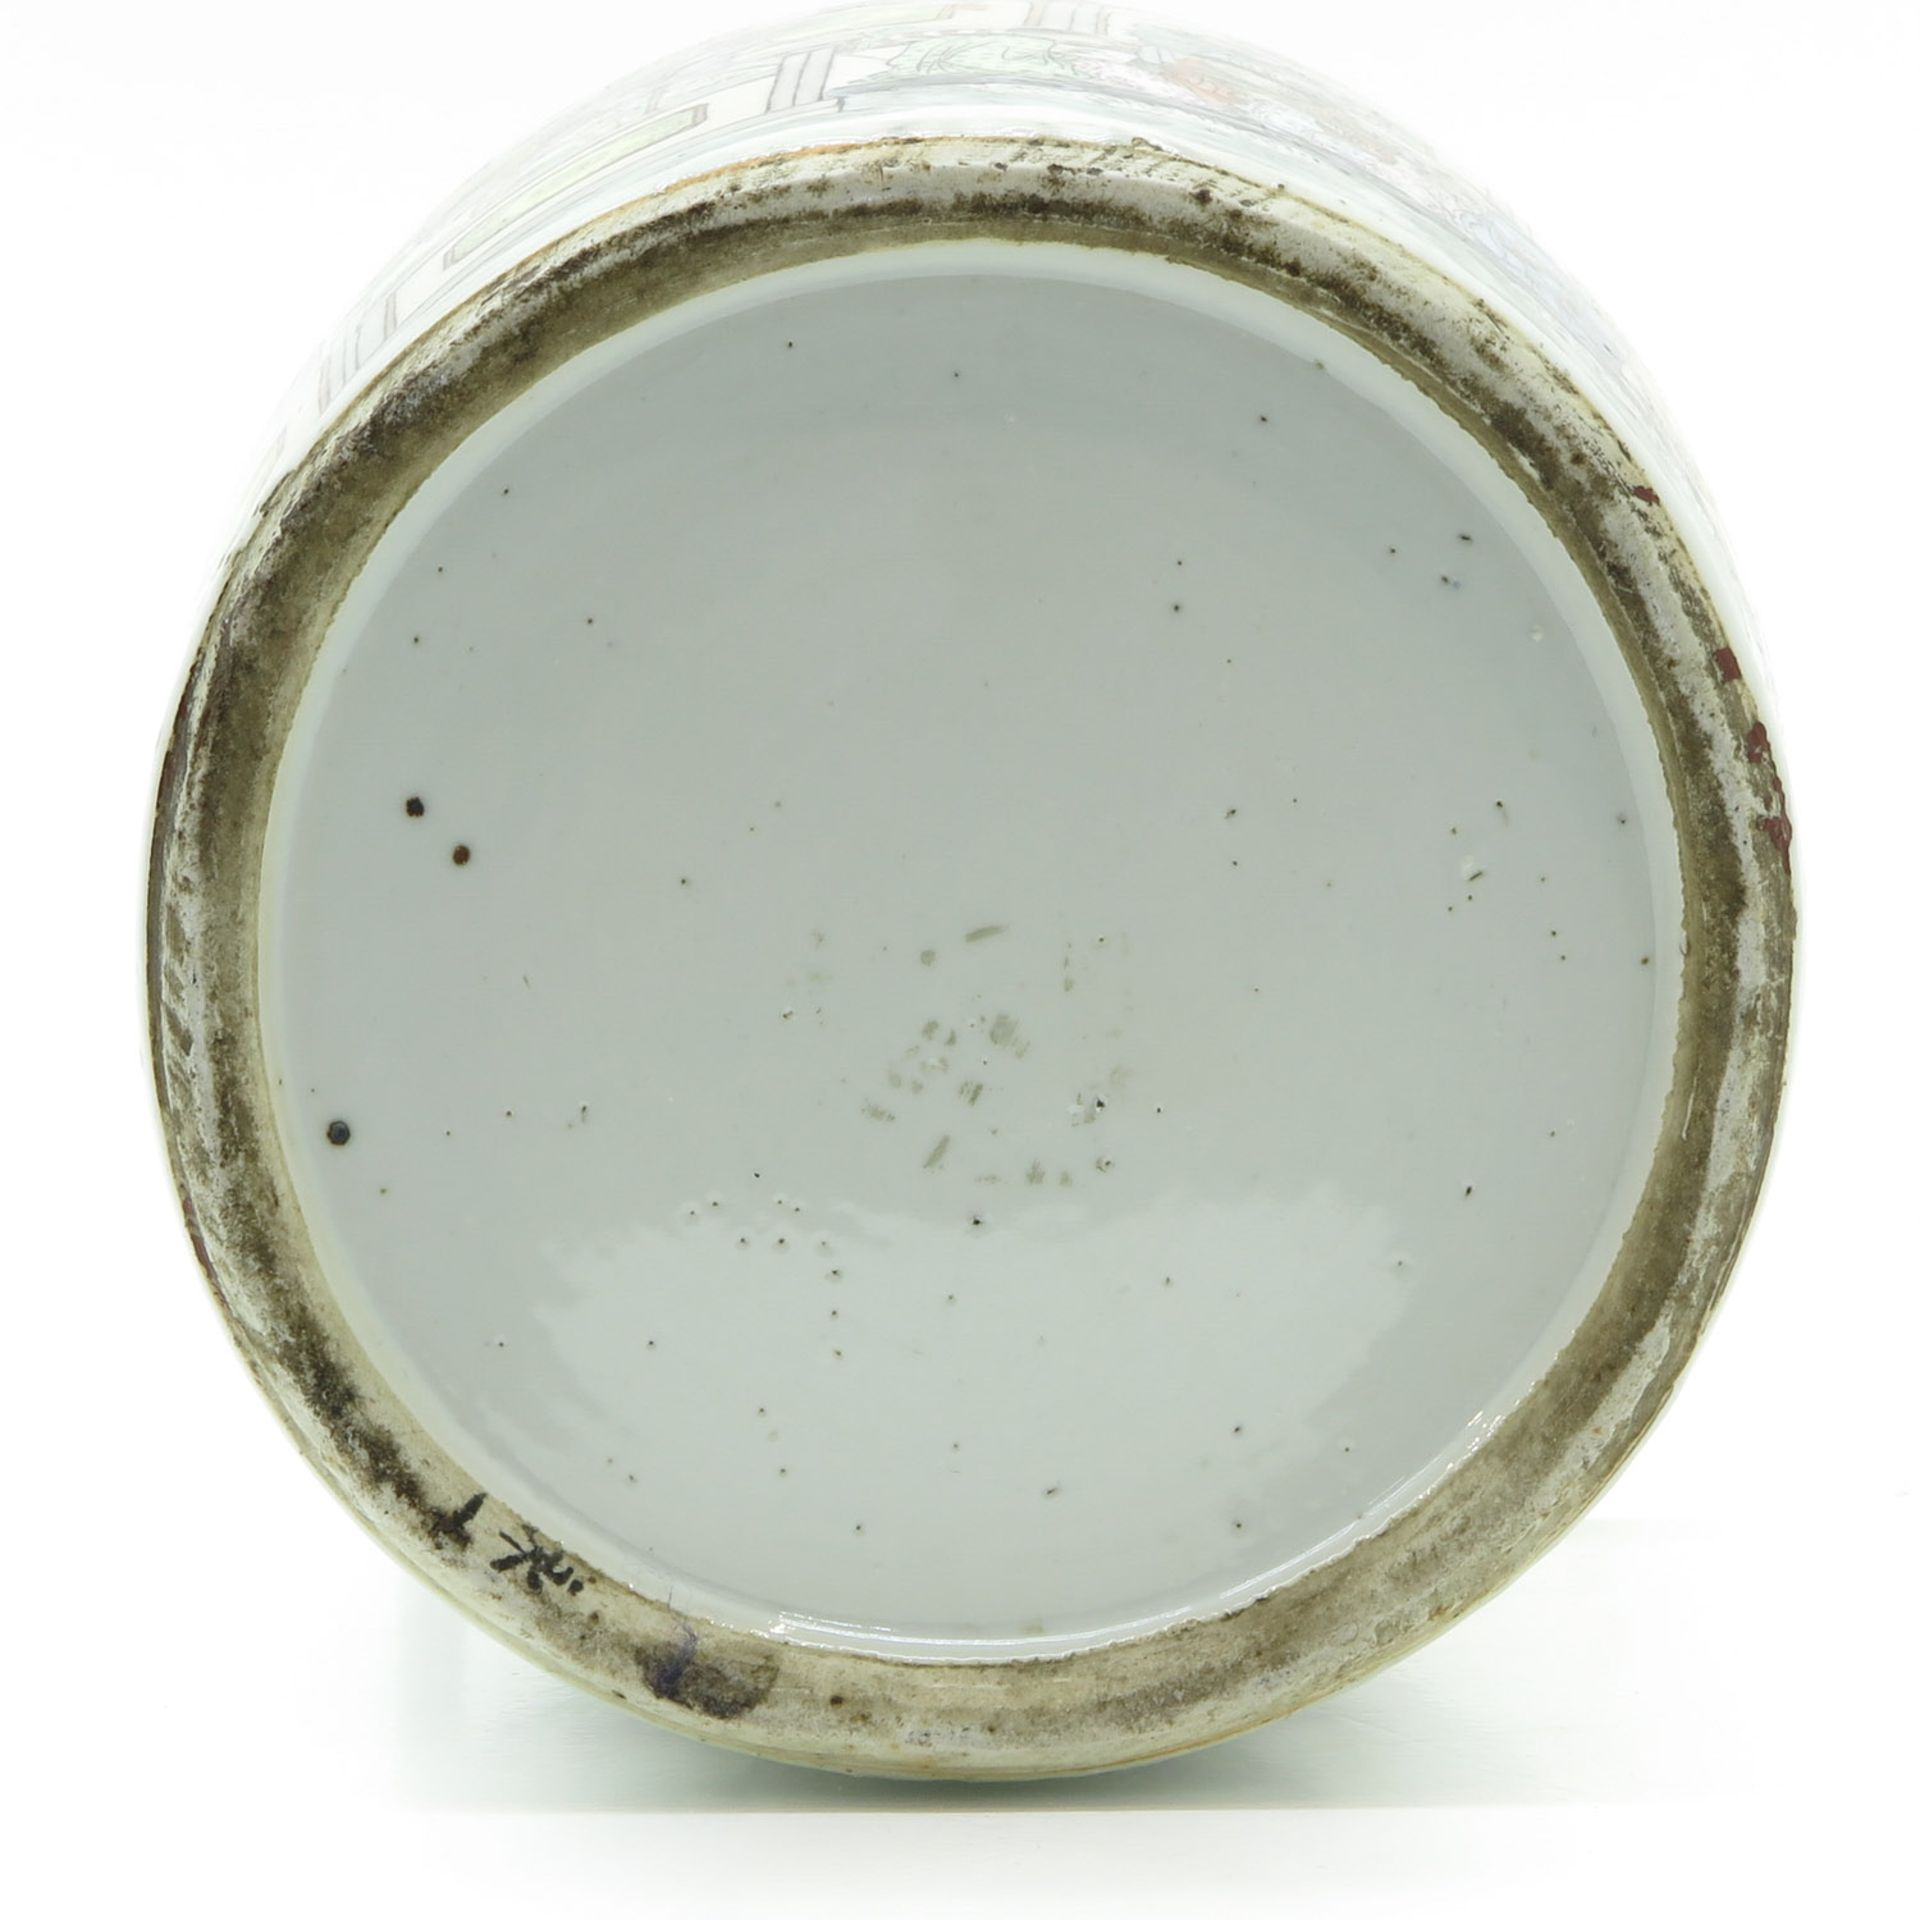 China Porcelain Republic Period Vase - Image 6 of 6